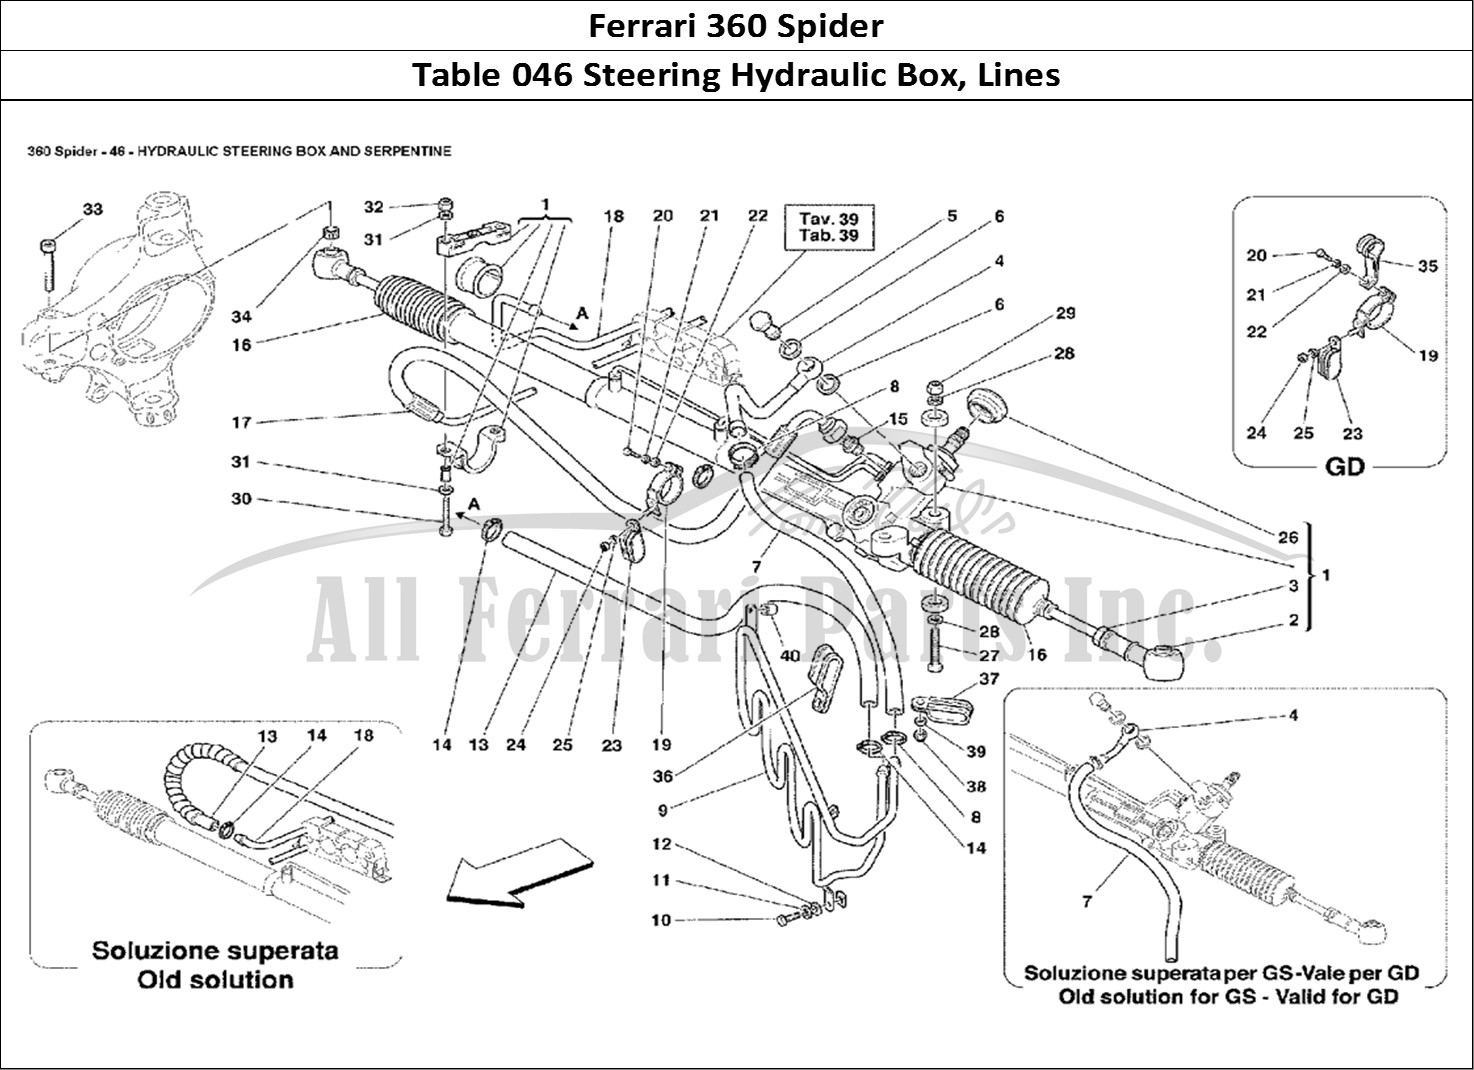 Ferrari Parts Ferrari 360 Spider Page 046 Hydraulic Steering Box an